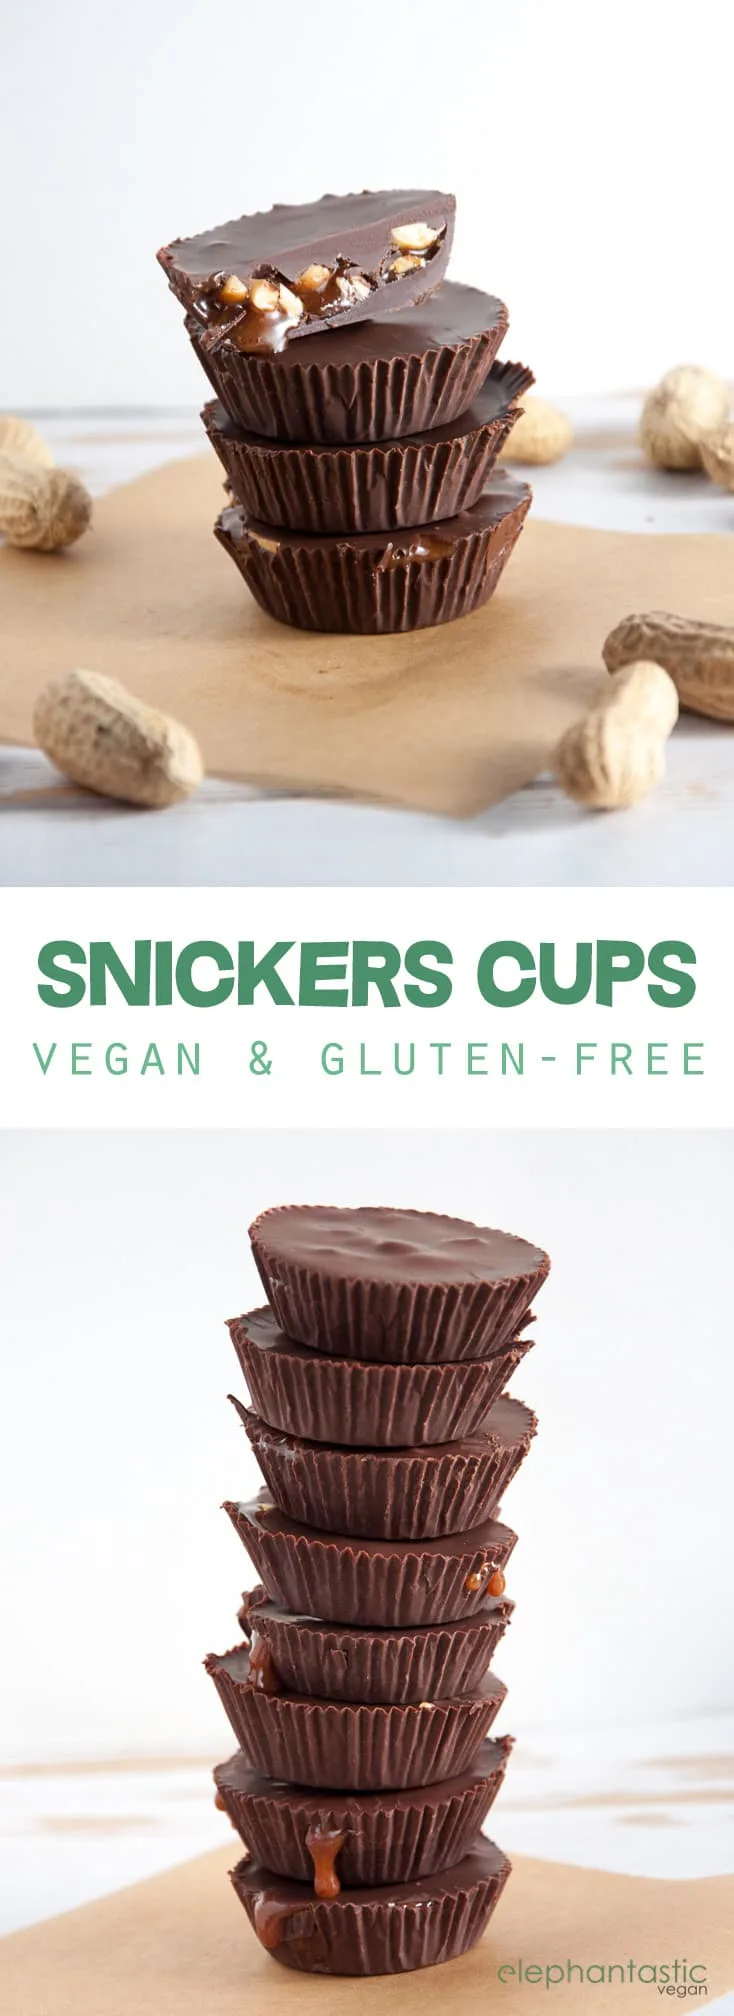 Vegan Snickers Cups | ElephantasticVegan.com